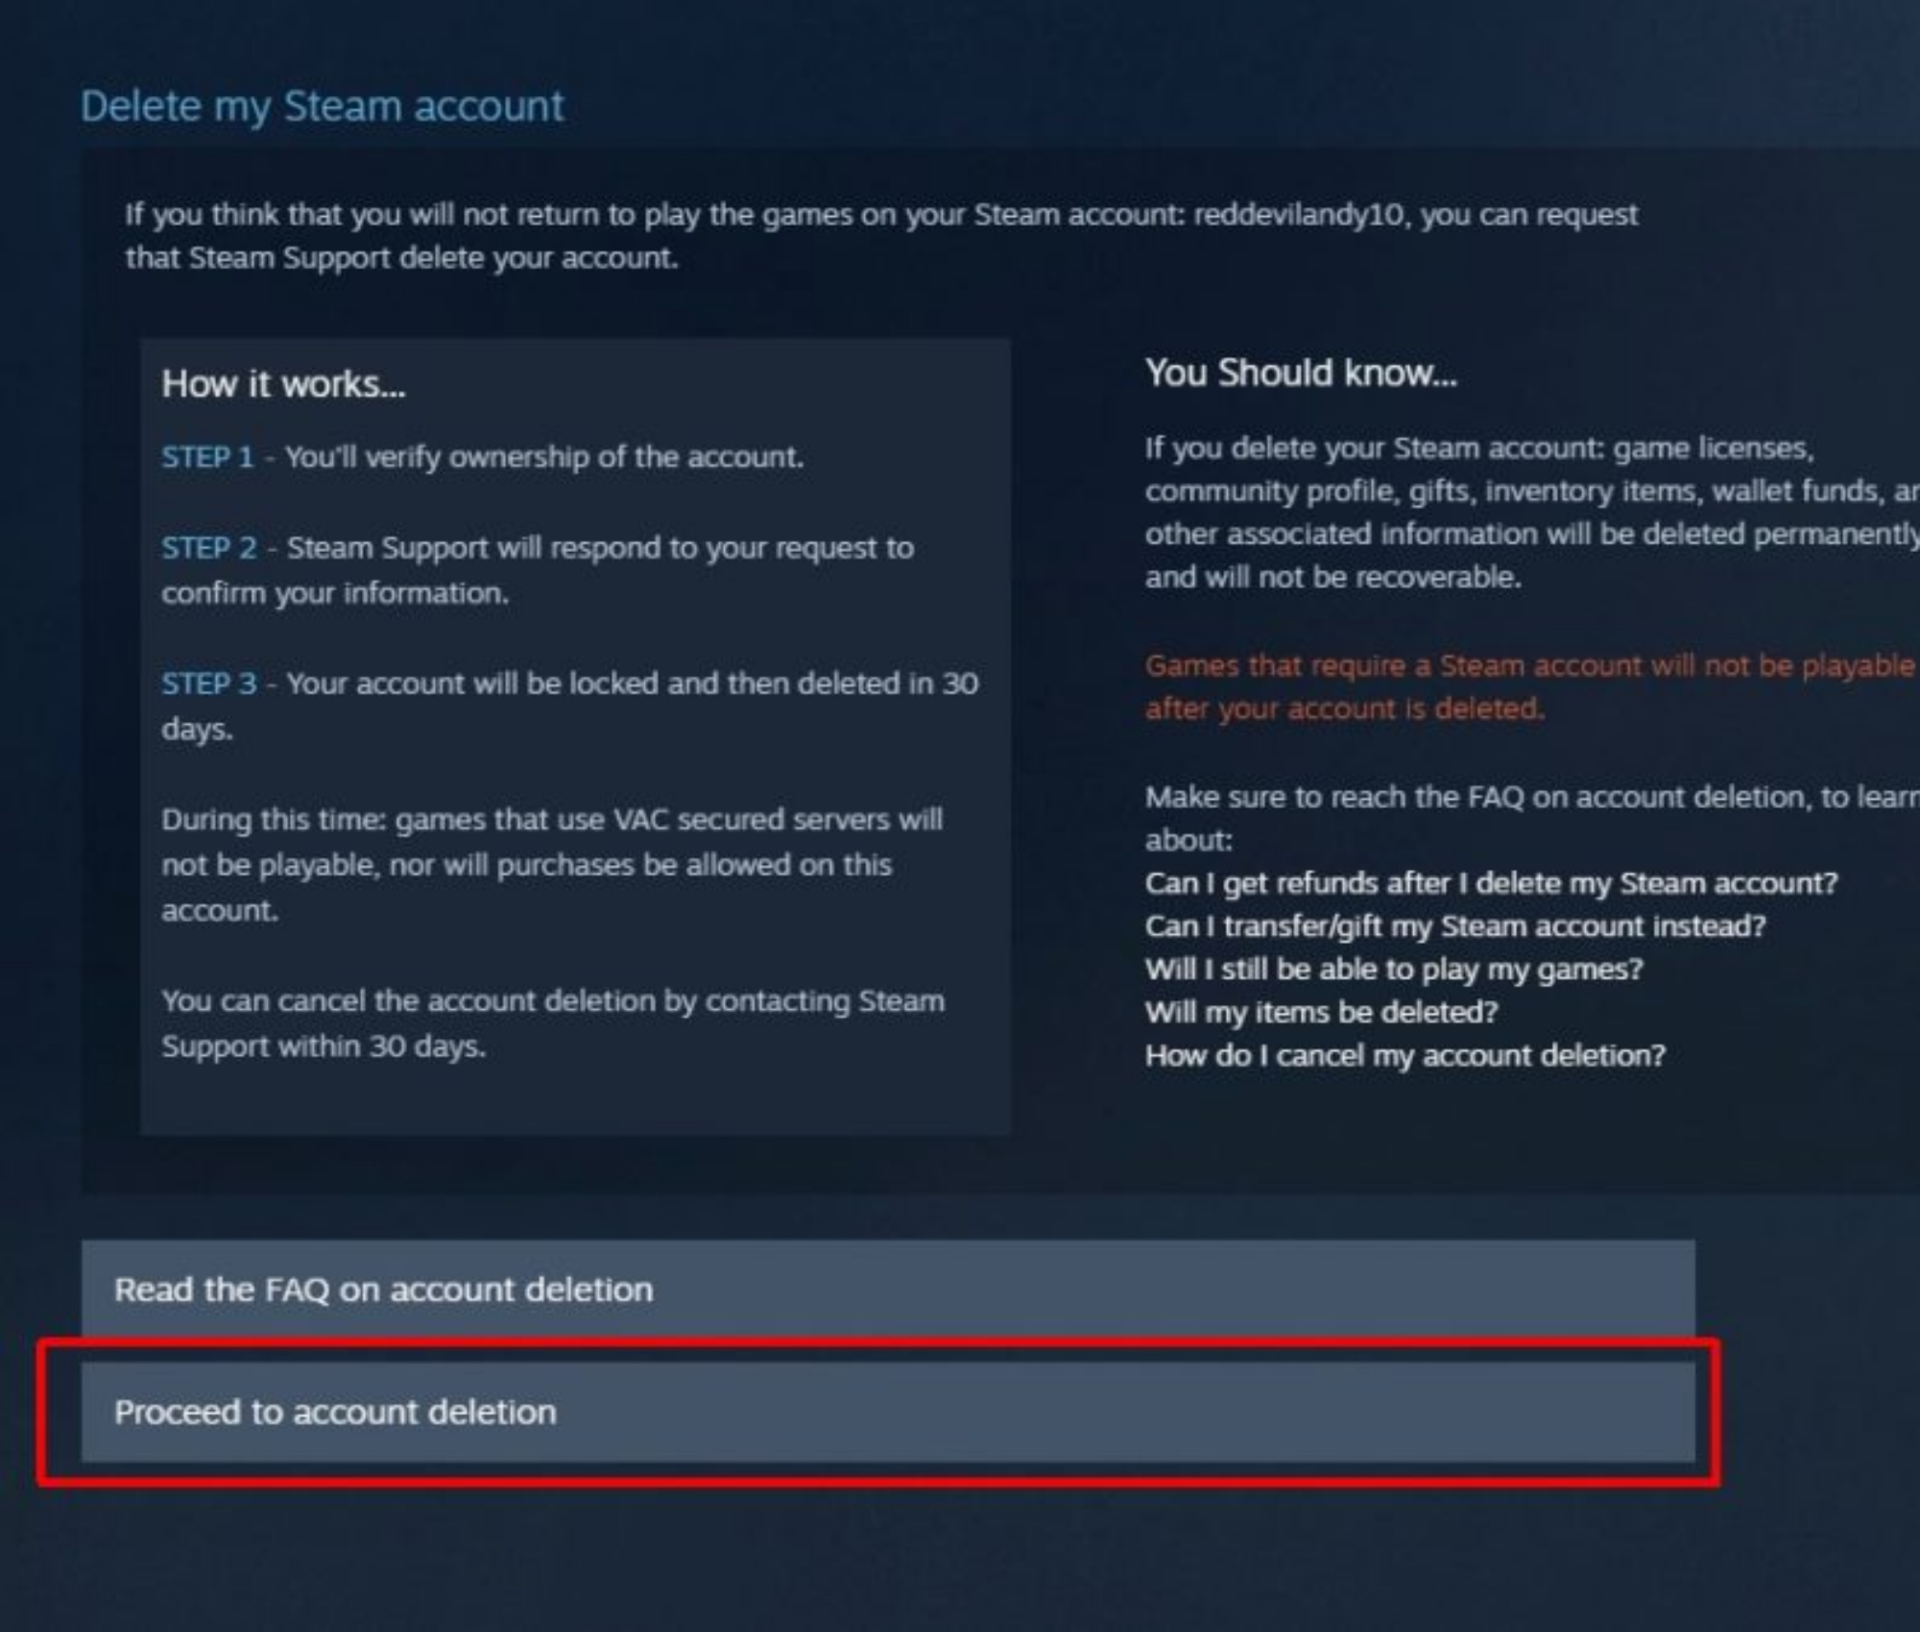 "Delete my Steam account" page